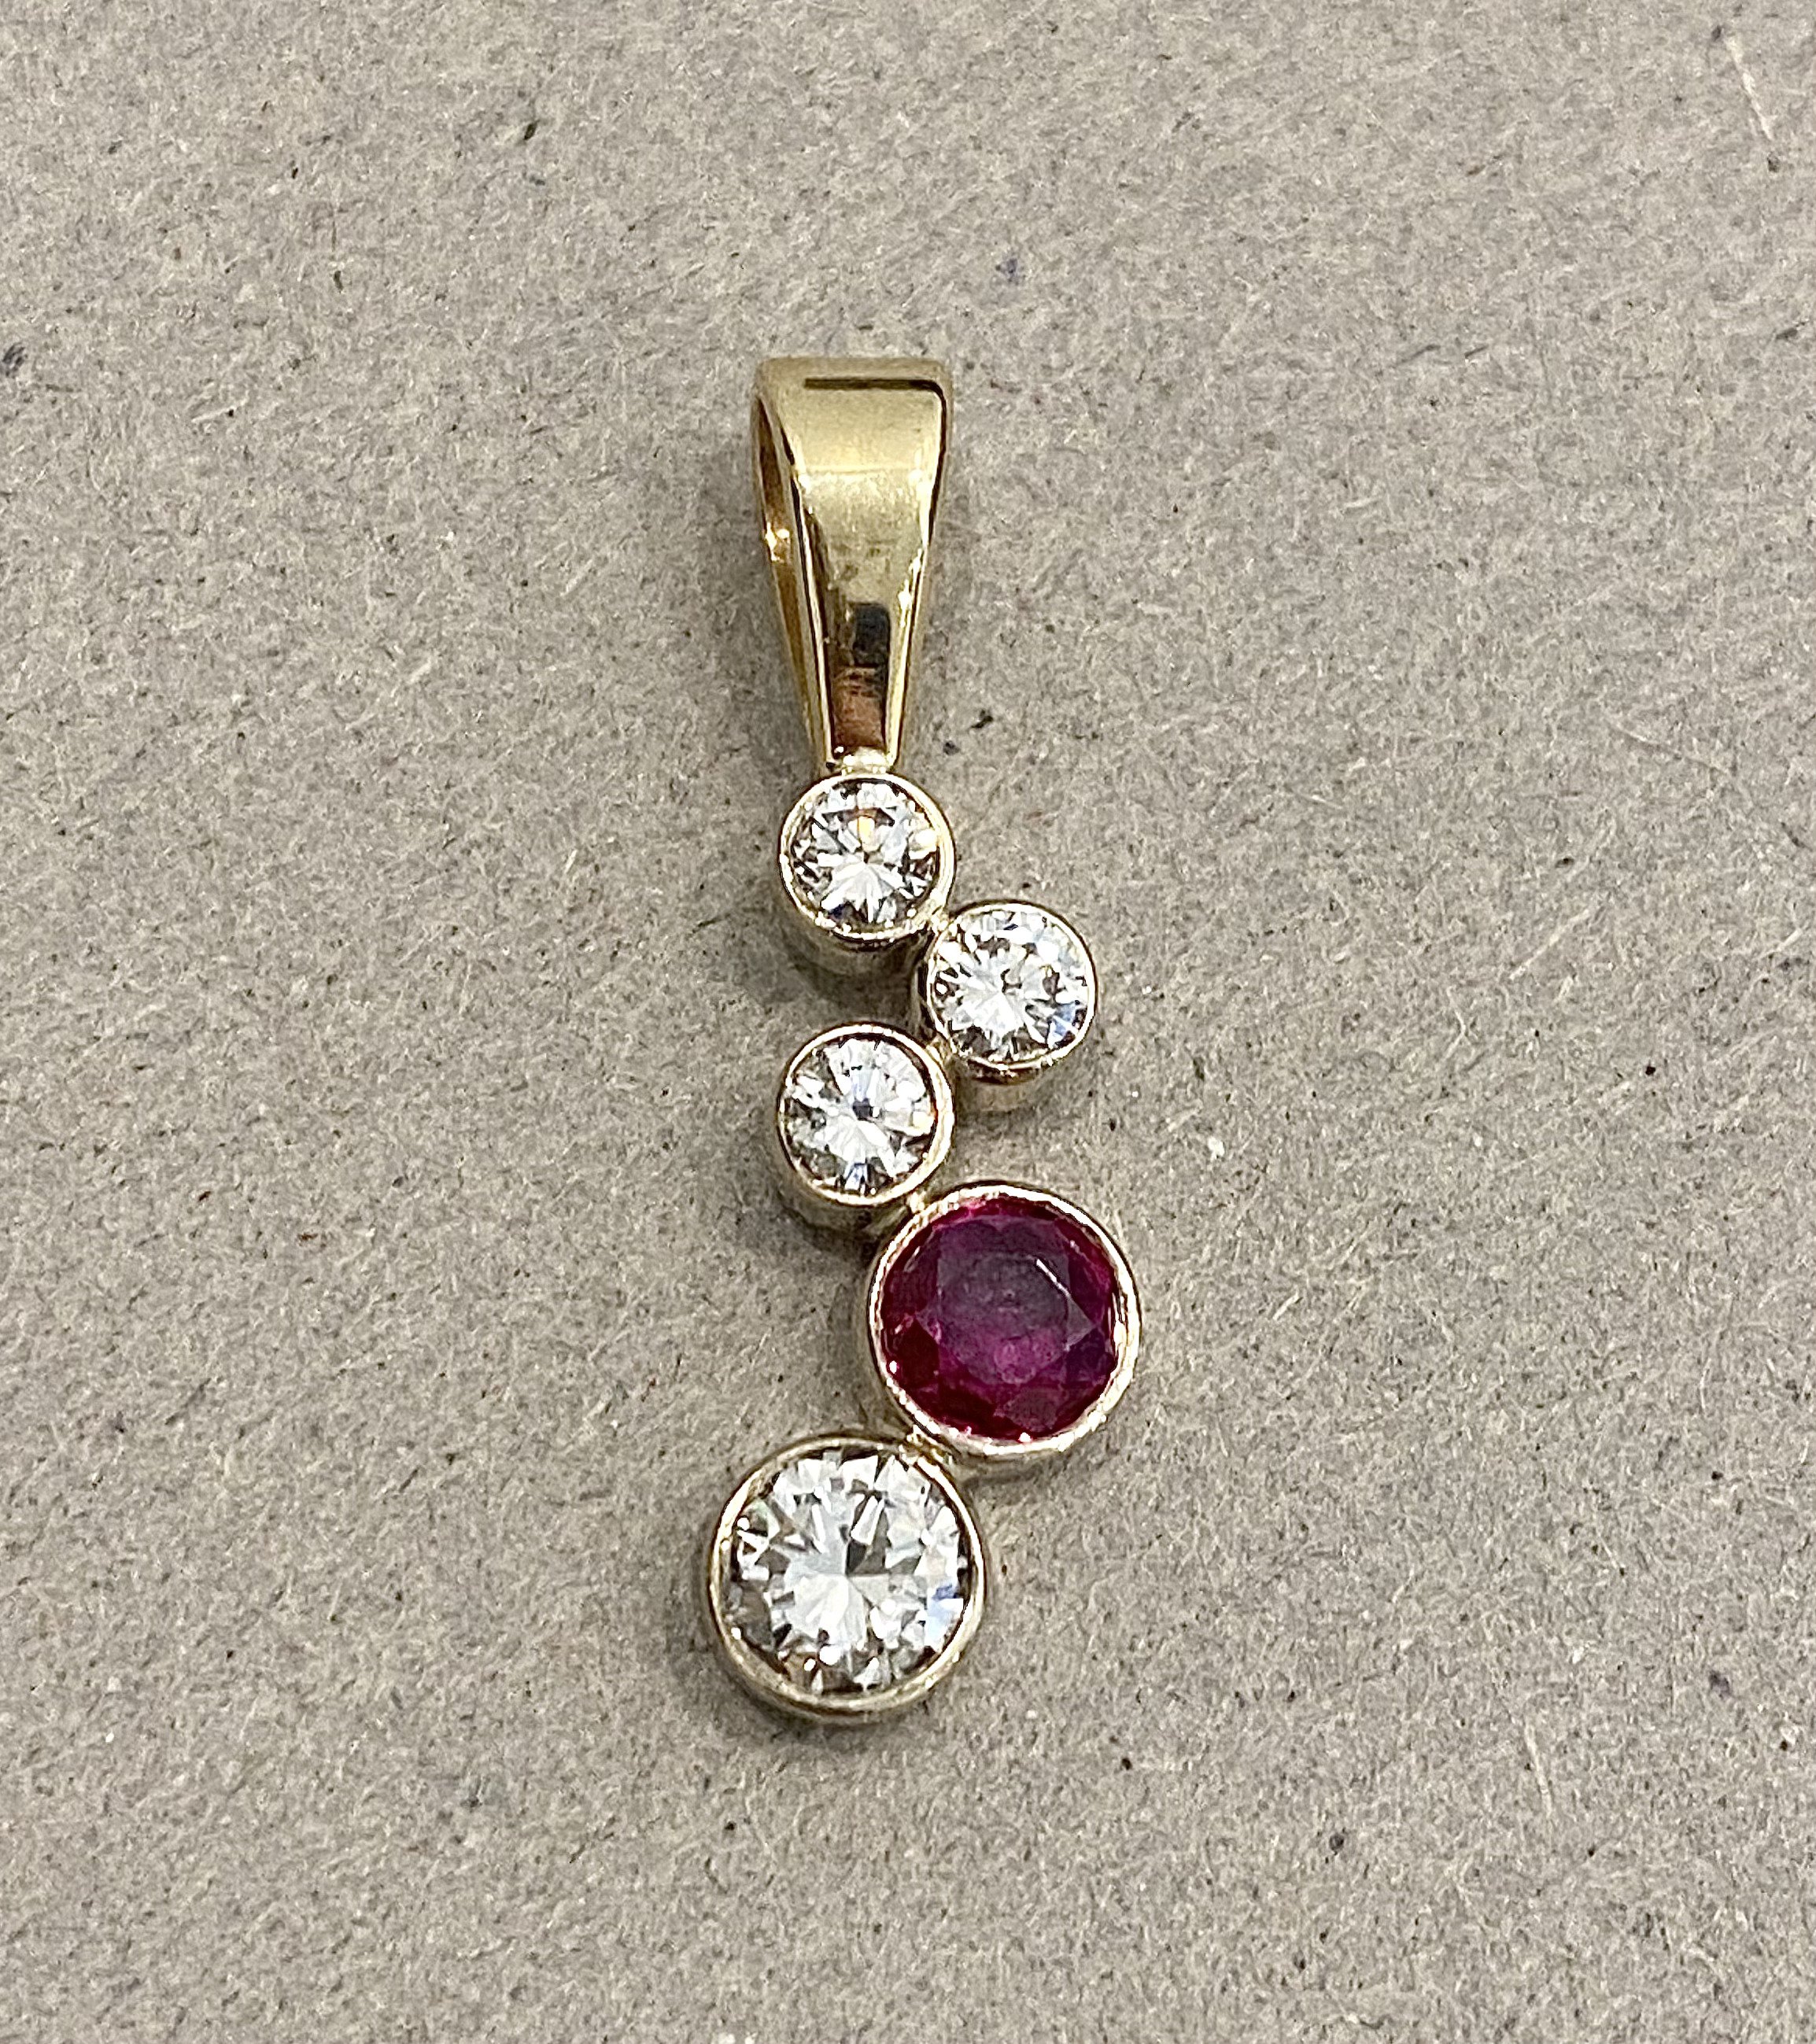 Ruby and Diamond Pendant